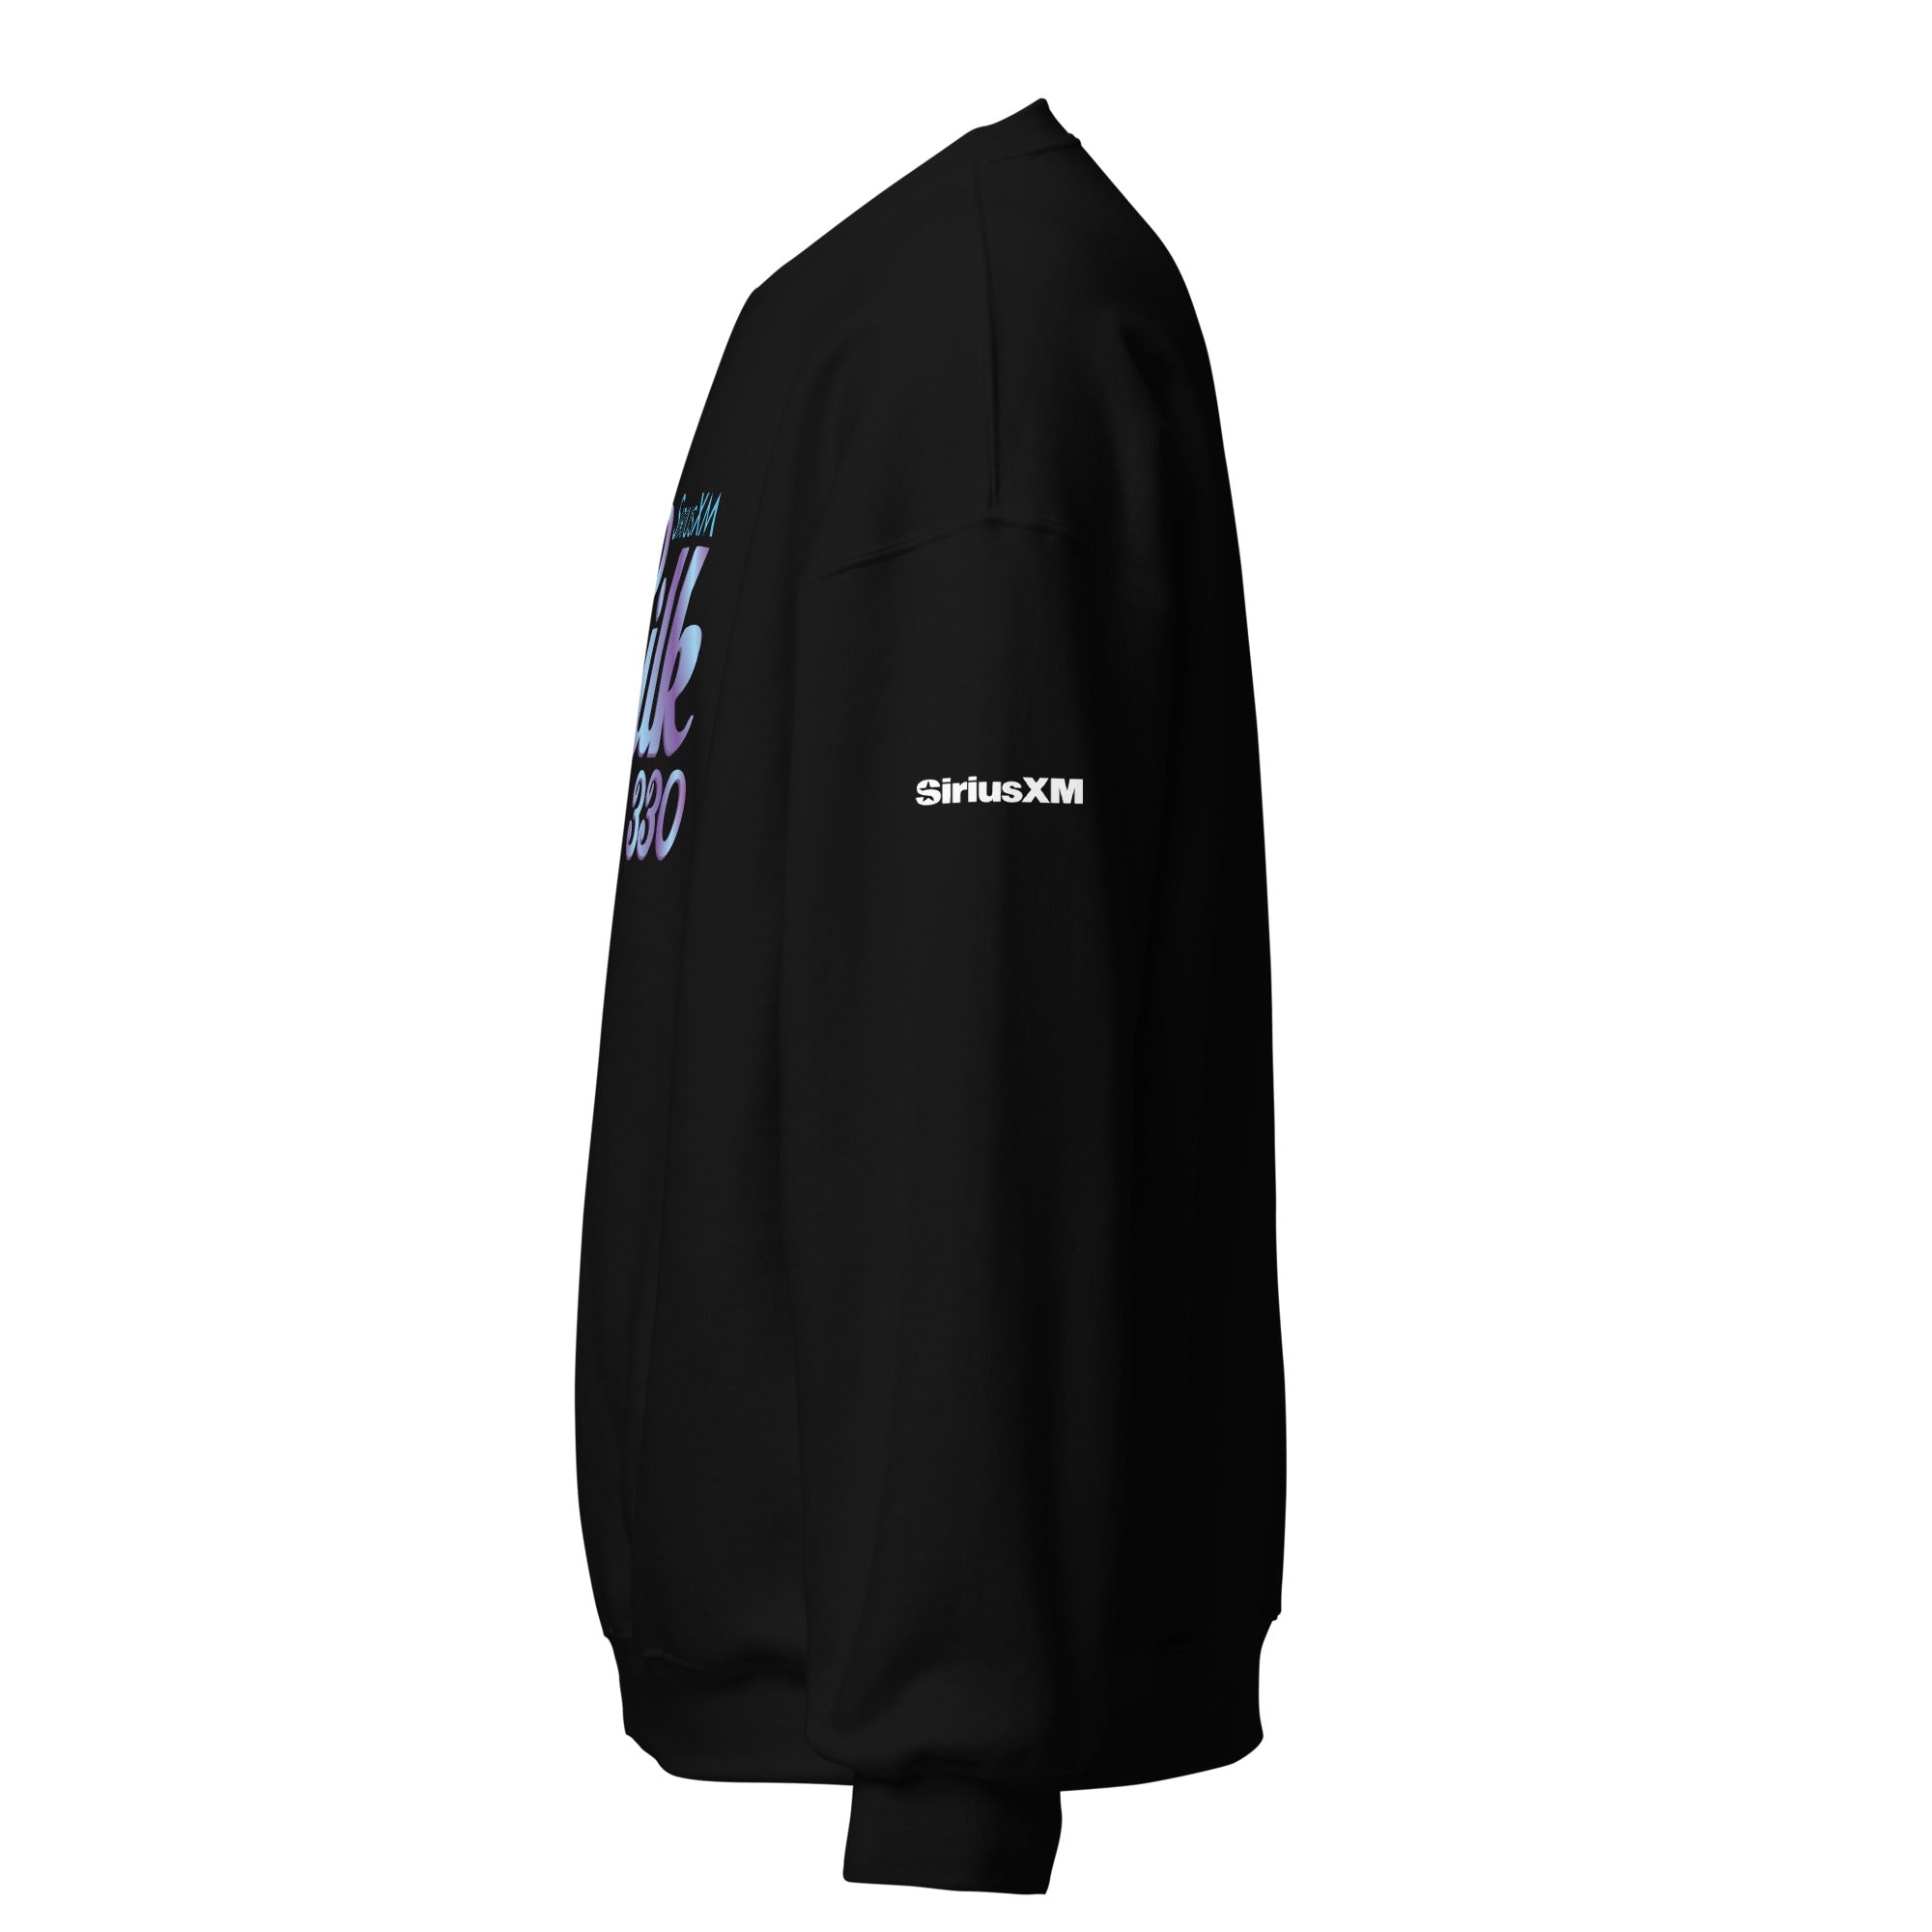 SiriusXM Silk: Sweatshirt (Black)